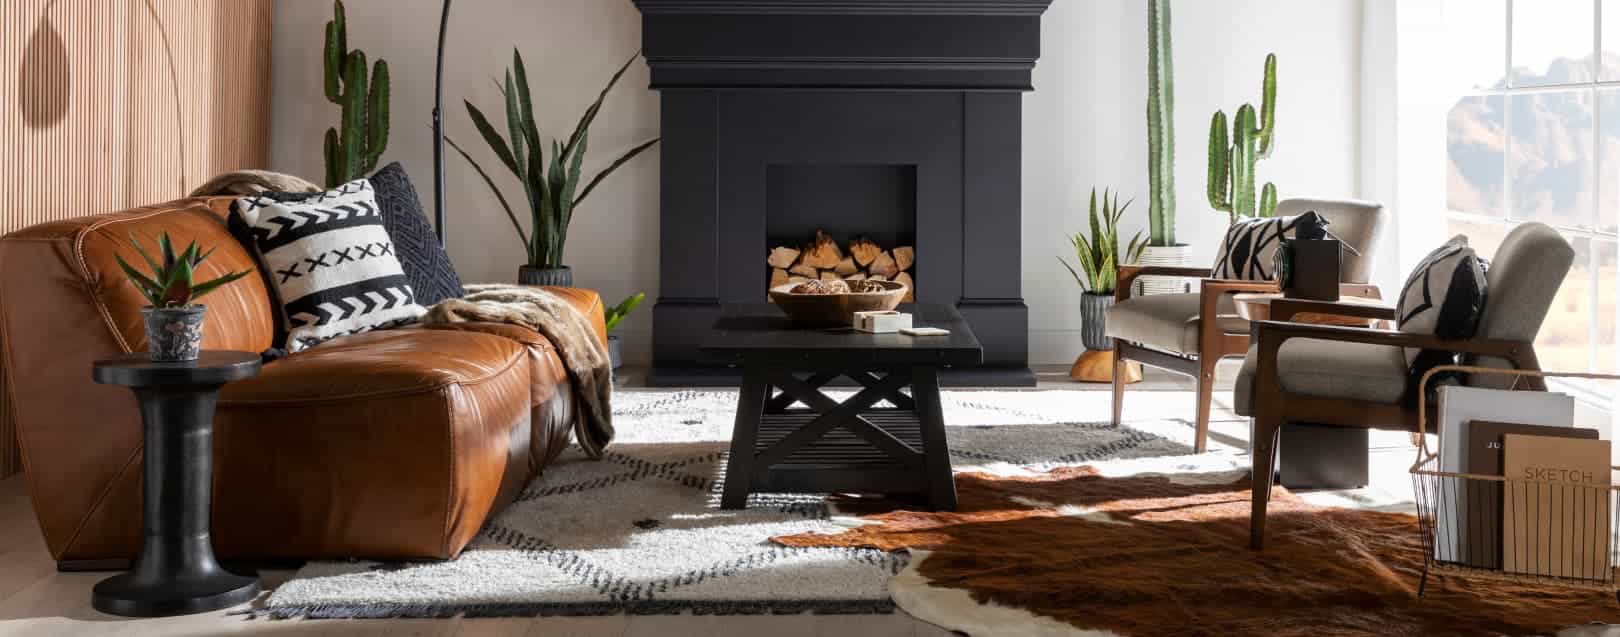 17 Dark Brown Leather Sofa Decorating Ideas